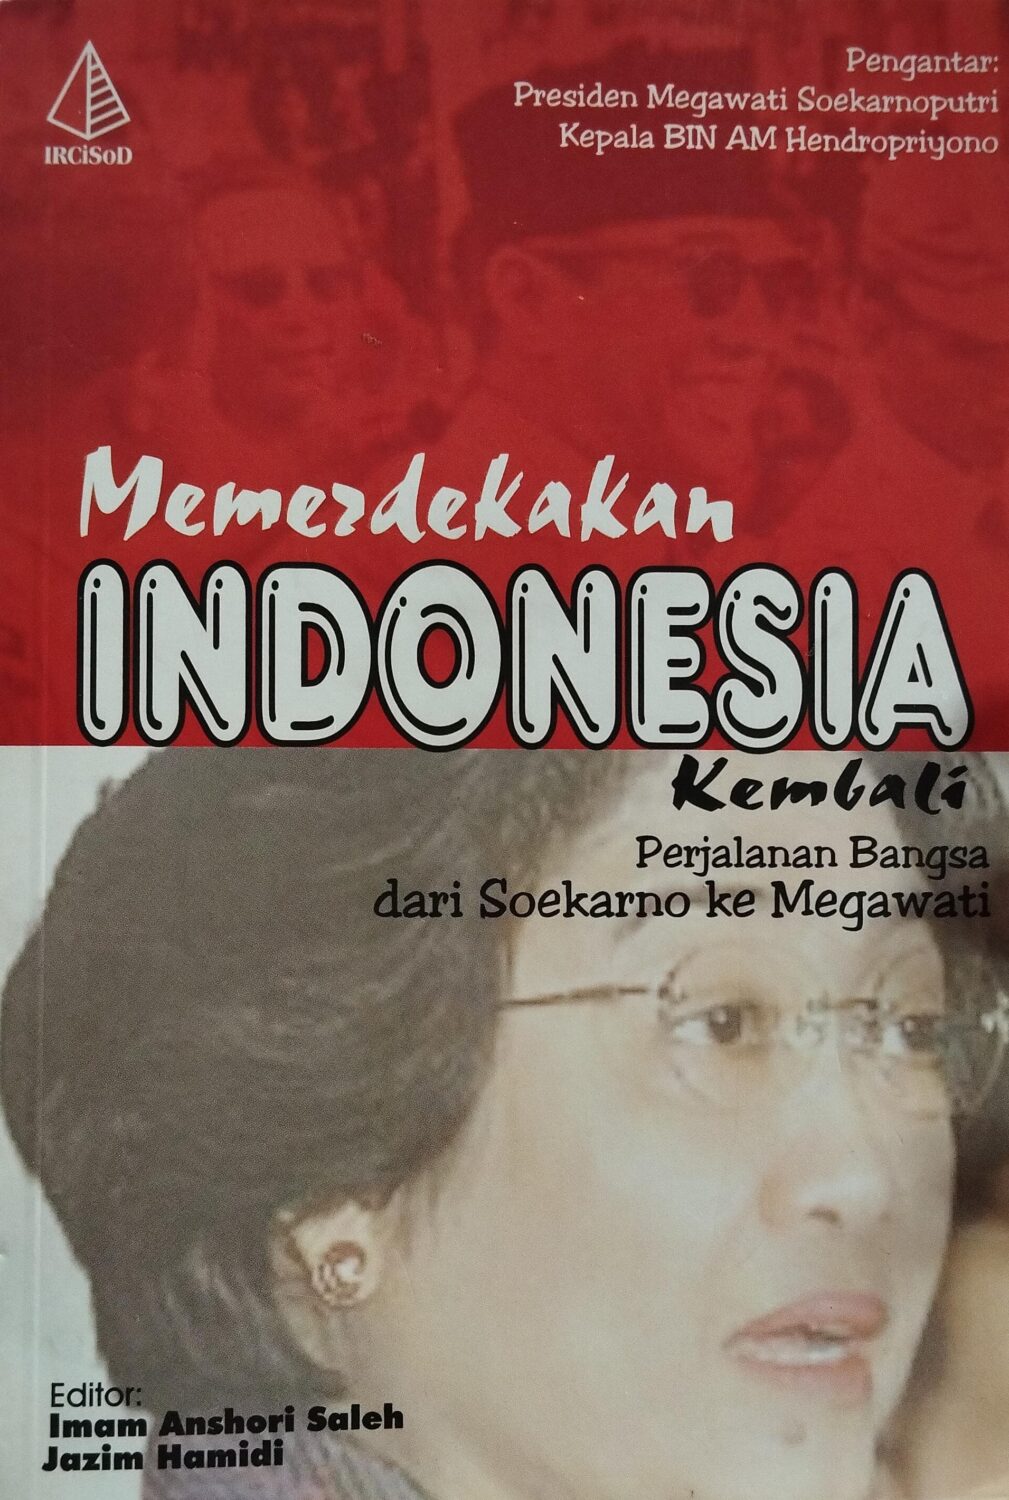 Kemerdekaan Indonesia Kembali, Perjalanan Bangsa dari Soekarno ke Megawati